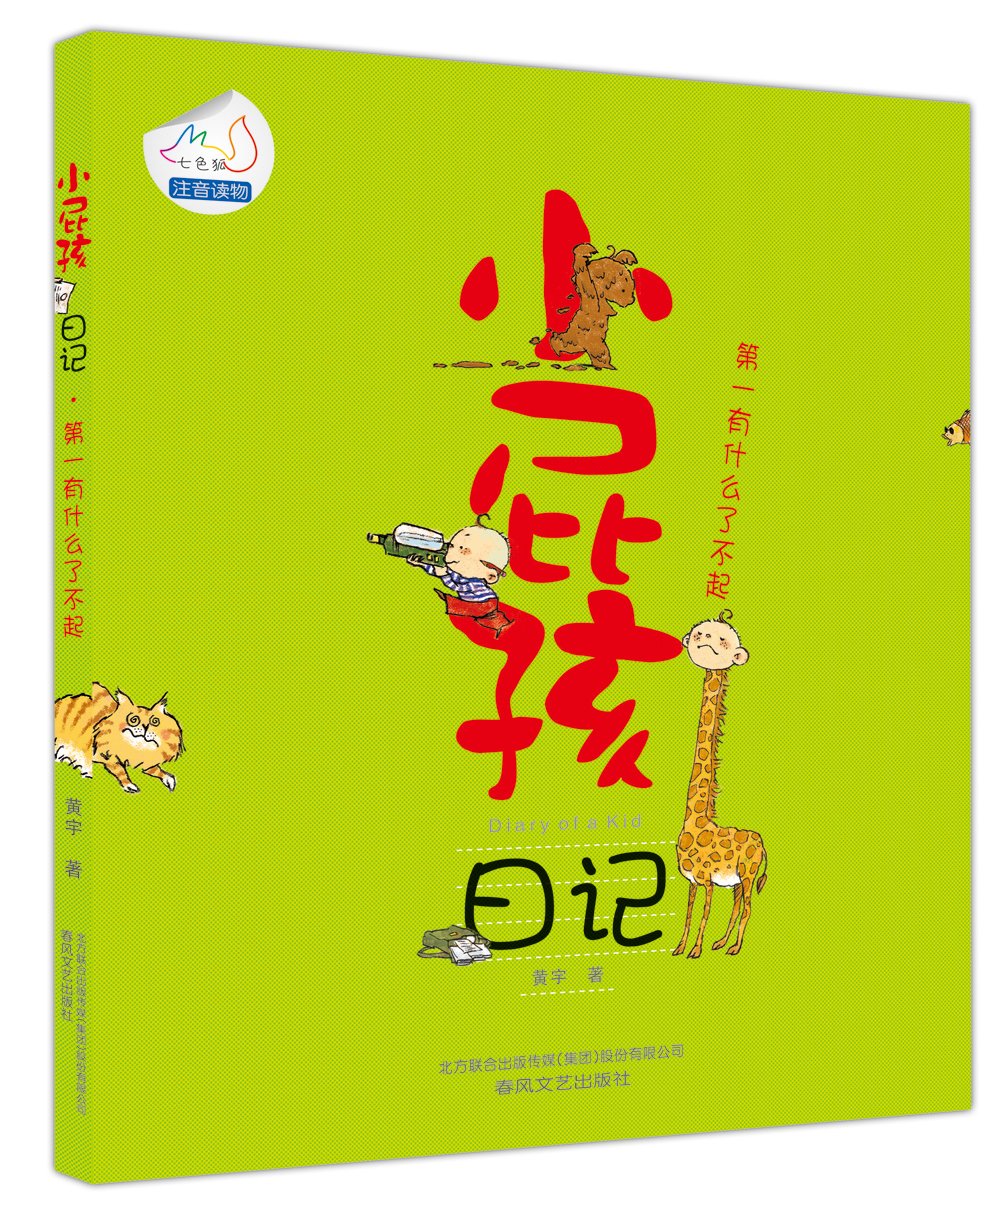 Diary of Wimpy Kid (Pinyin)小屁孩日记-一年级屁事多（注音版）